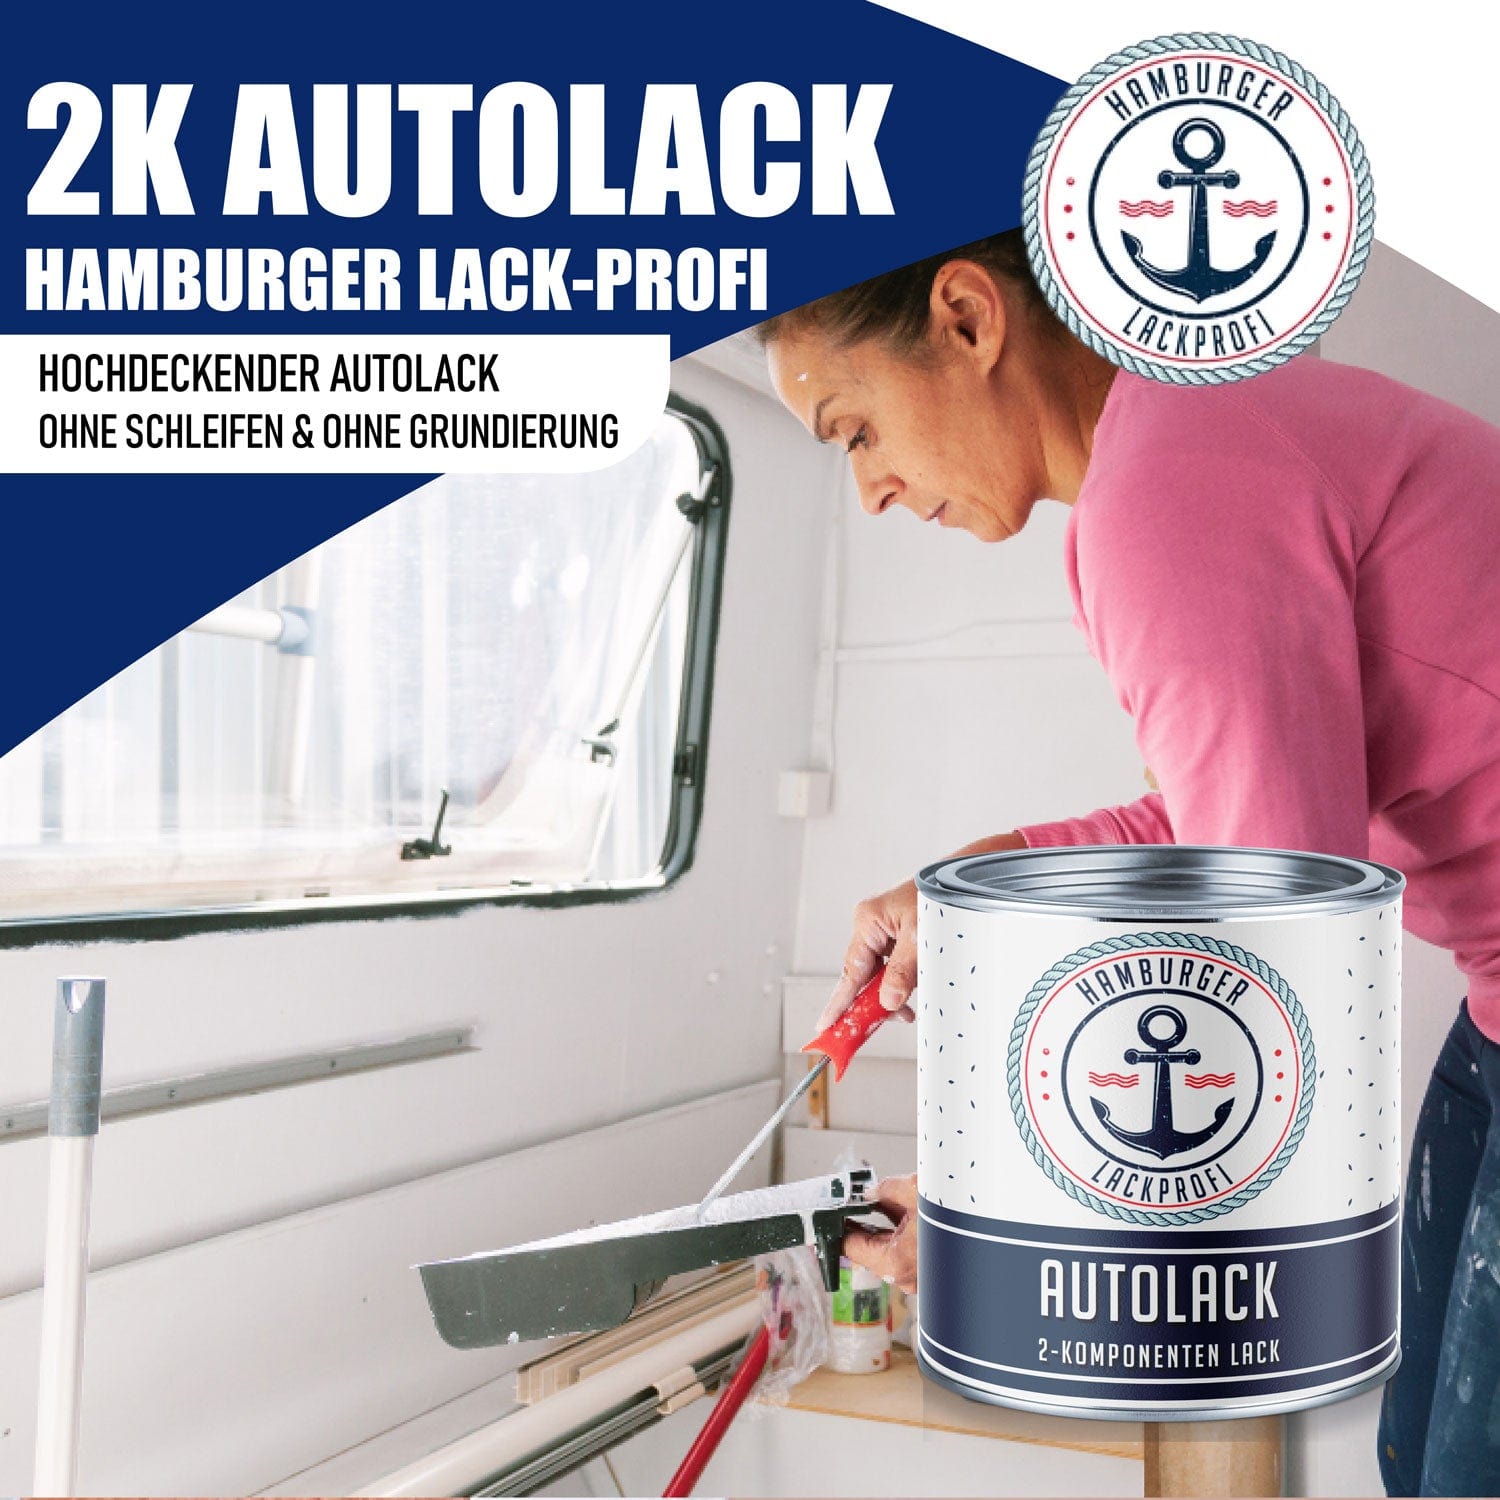 Hamburger Lack-Profi Lacke & Beschichtungen Hamburger Lack-Profi 2K Autolack in Zitronengelb RAL 1012 mit Lackierset (X300) & Verdünnung (1 L) - 30% Sparangebot